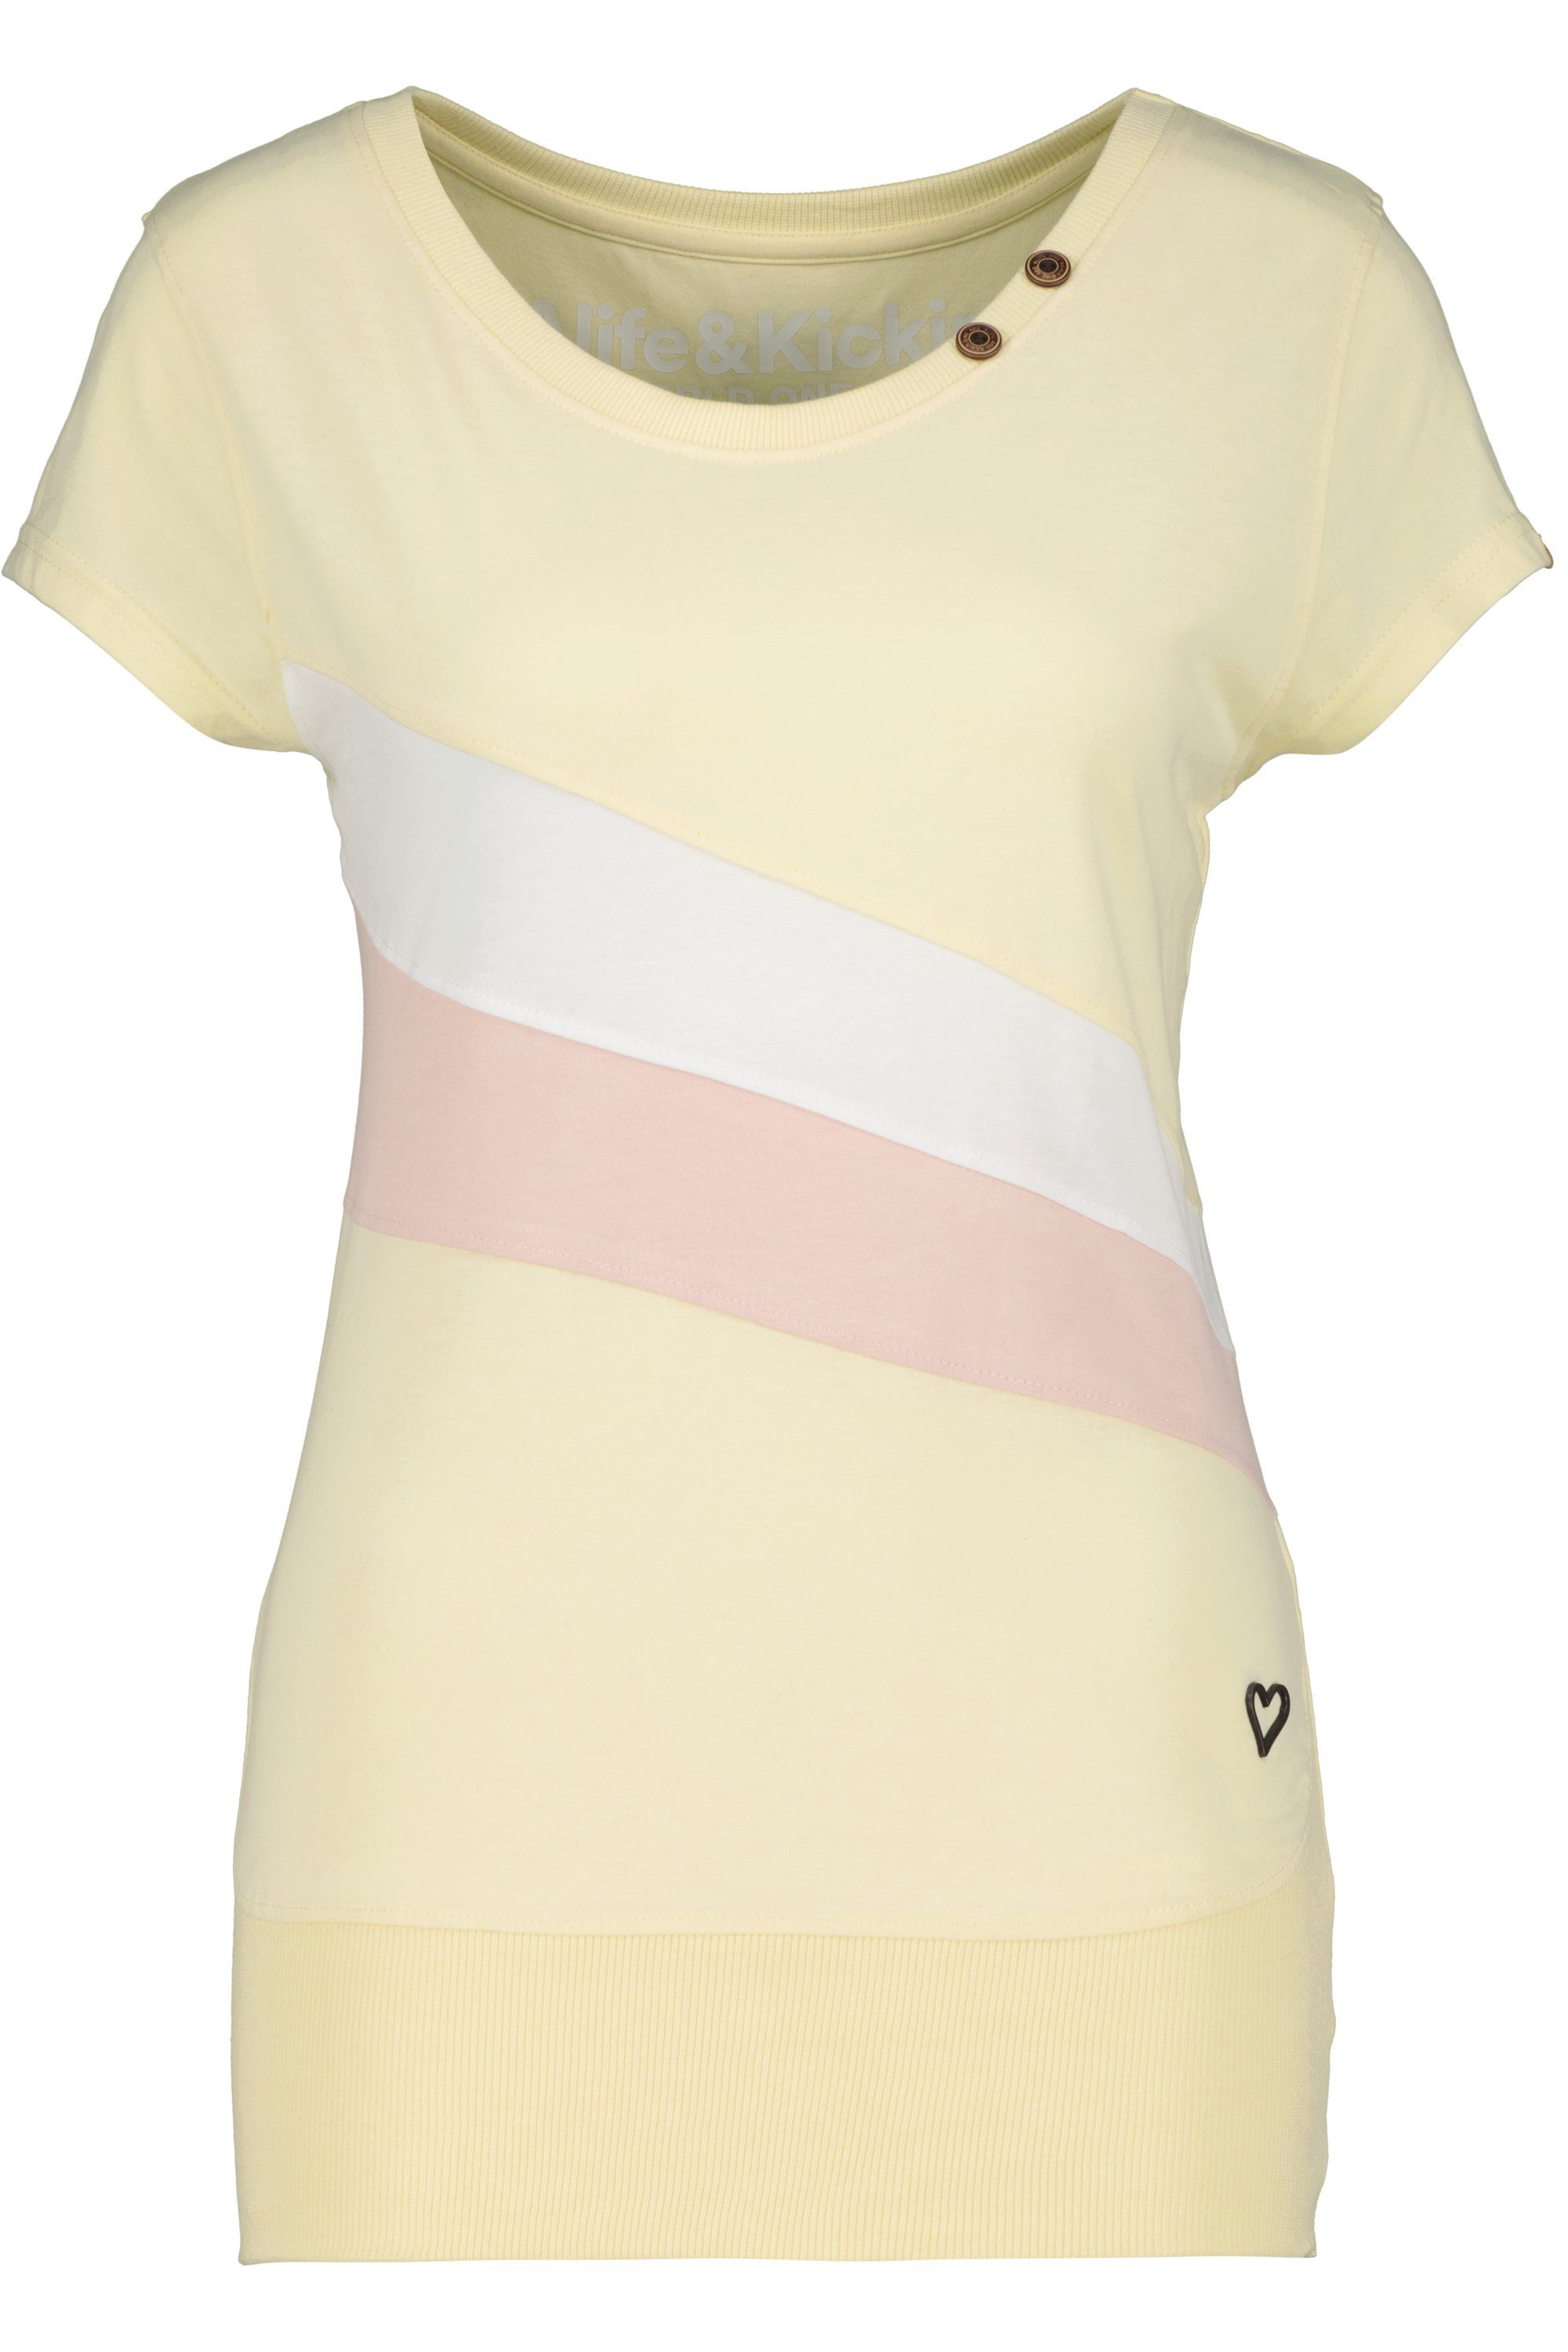 A CleaAK T-Shirt Kickin & Damen T-Shirt Alife melange Shirt creme